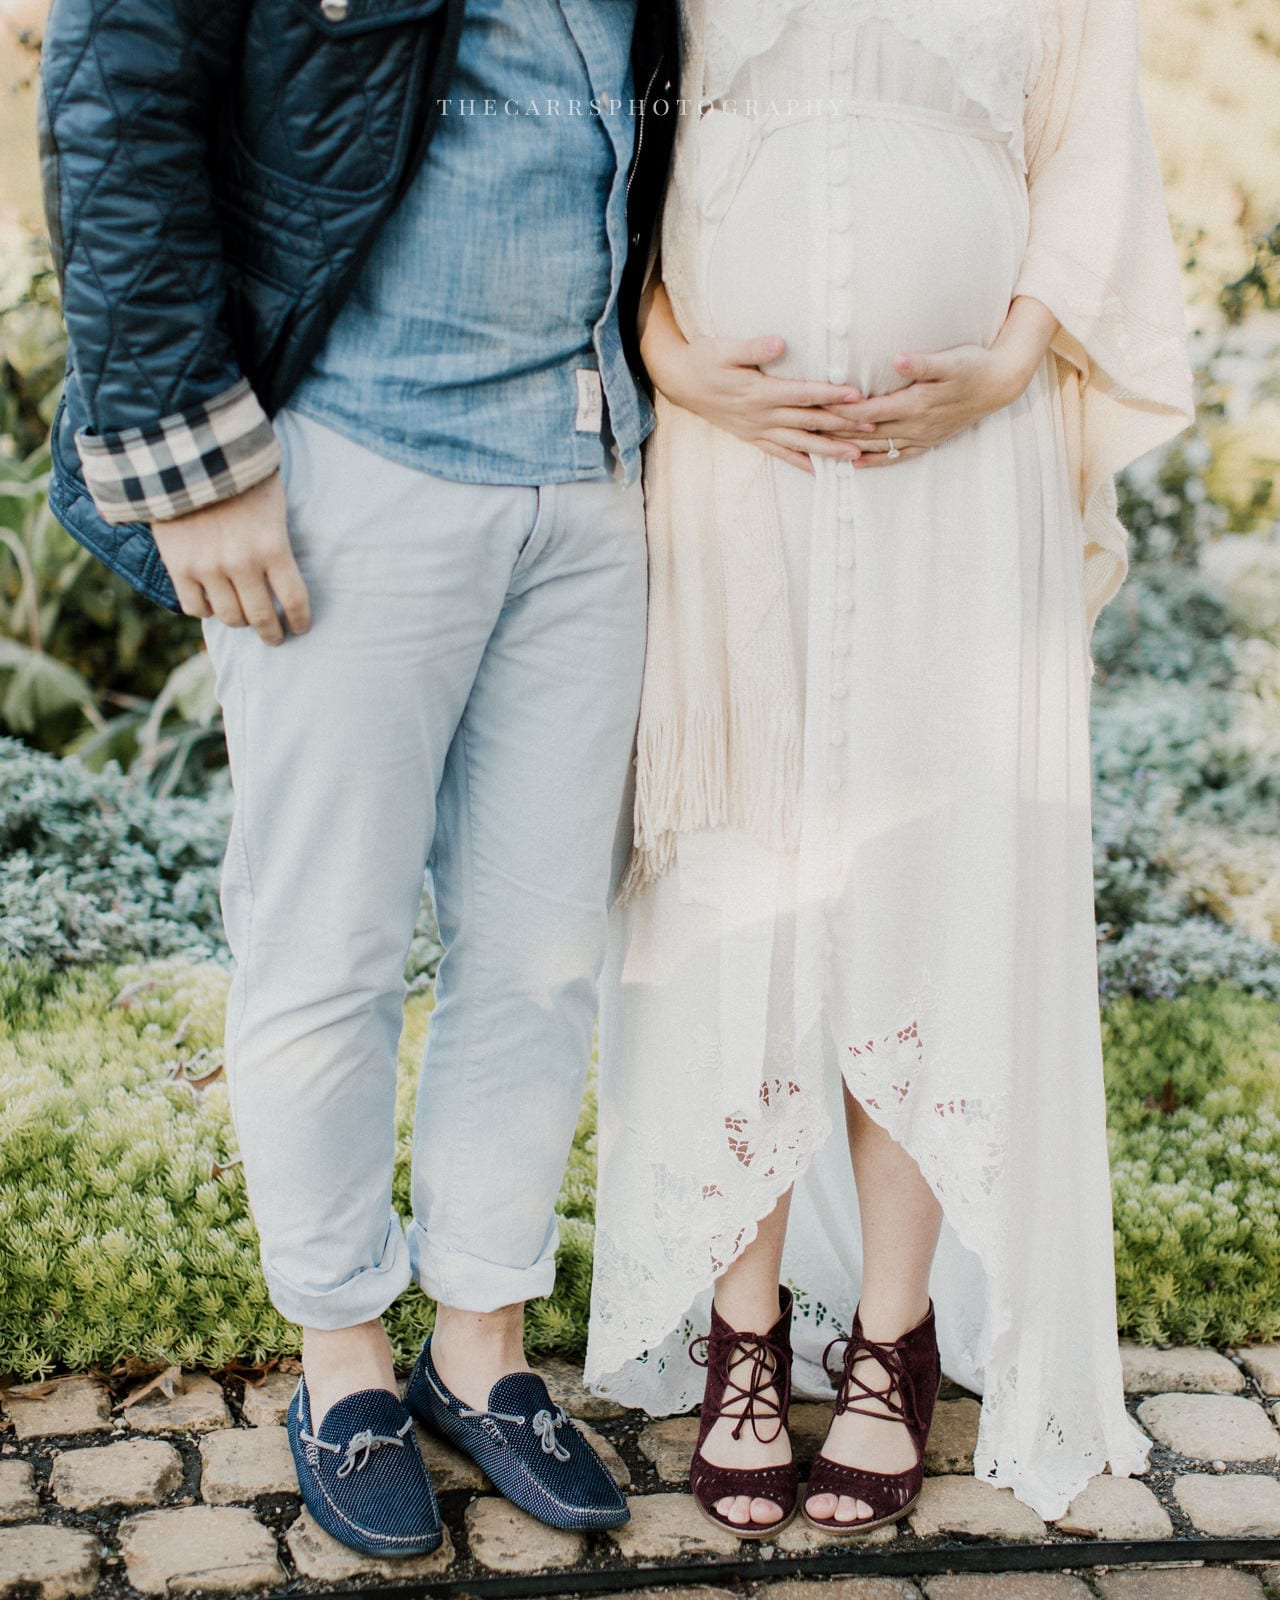 man and woman embrace - dayton ohio maternity photographer